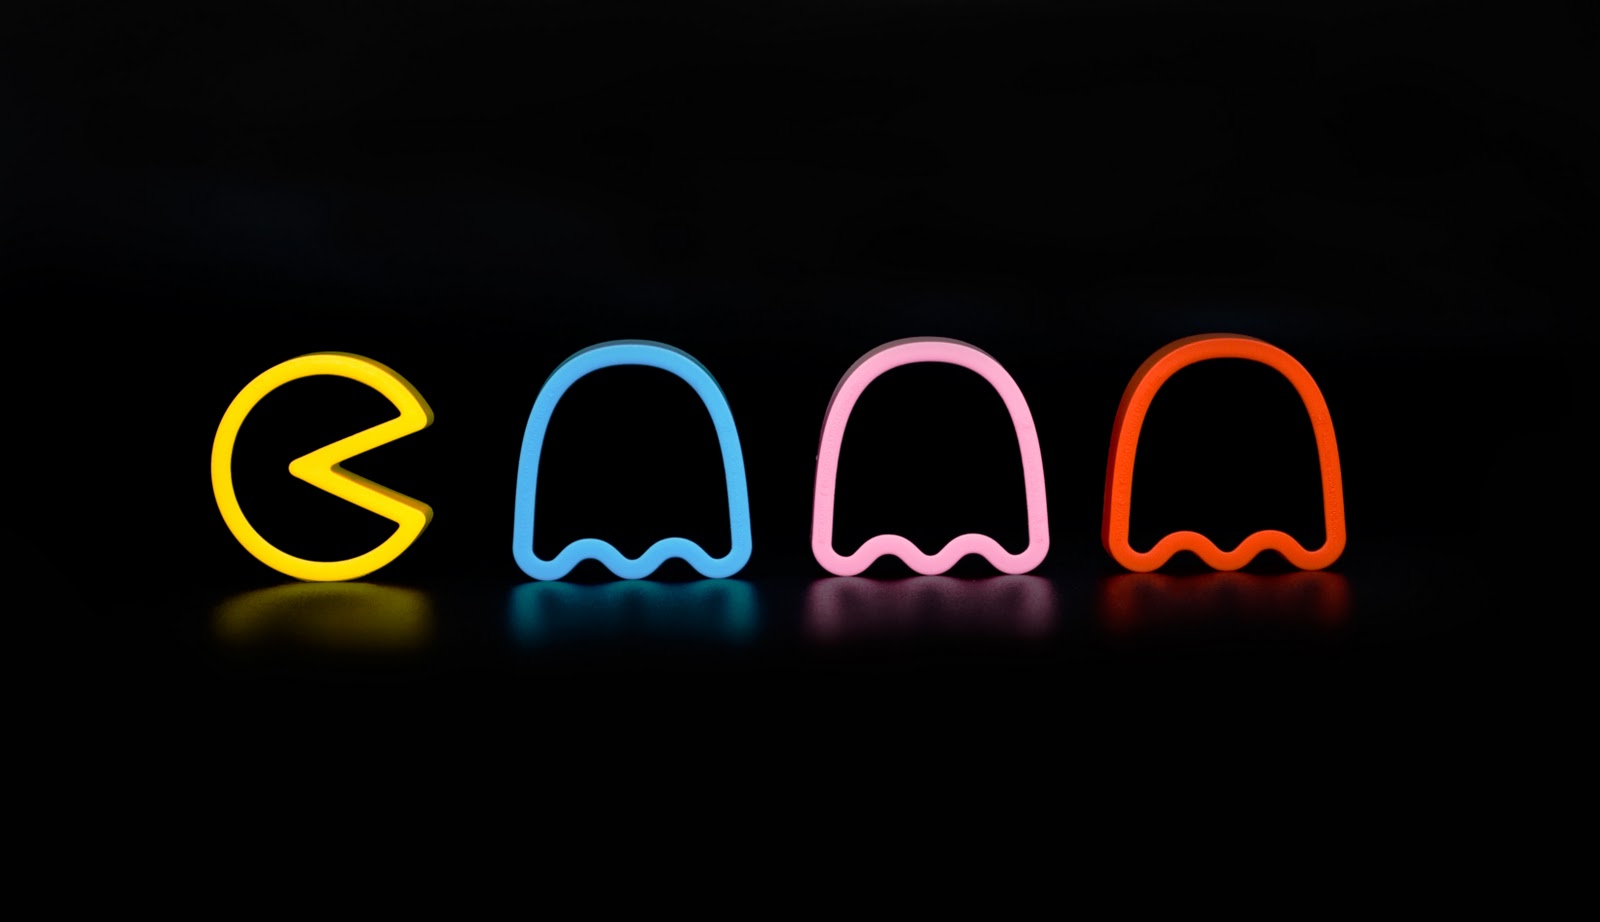 1980 – Pac-Man is Born